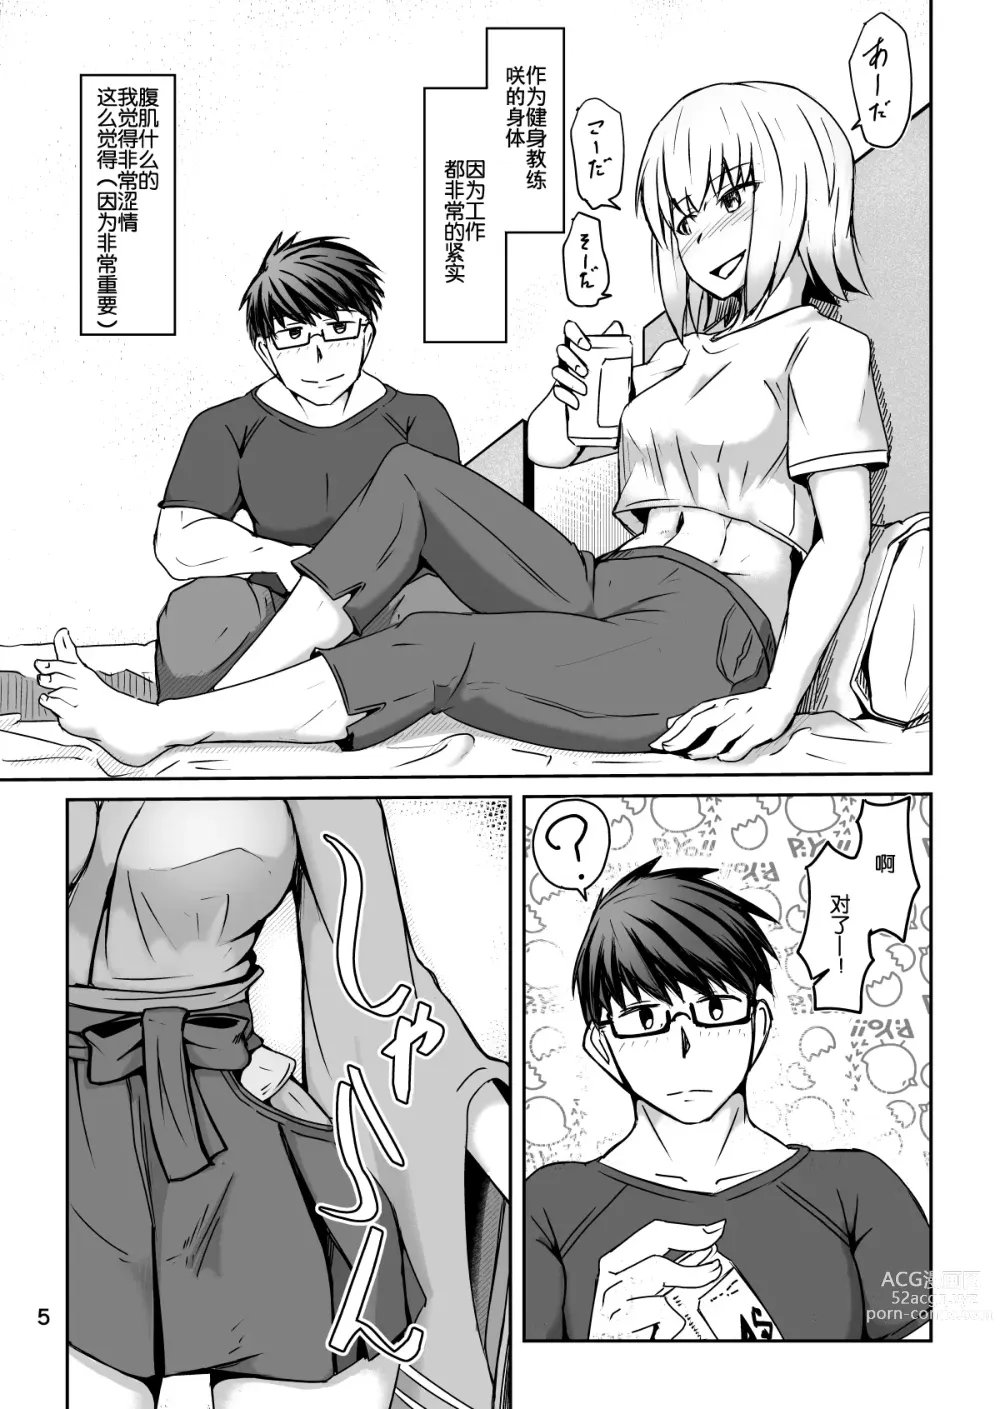 Page 5 of doujinshi Cosplay Uriko no Otomodachi: Event-zennya sex!